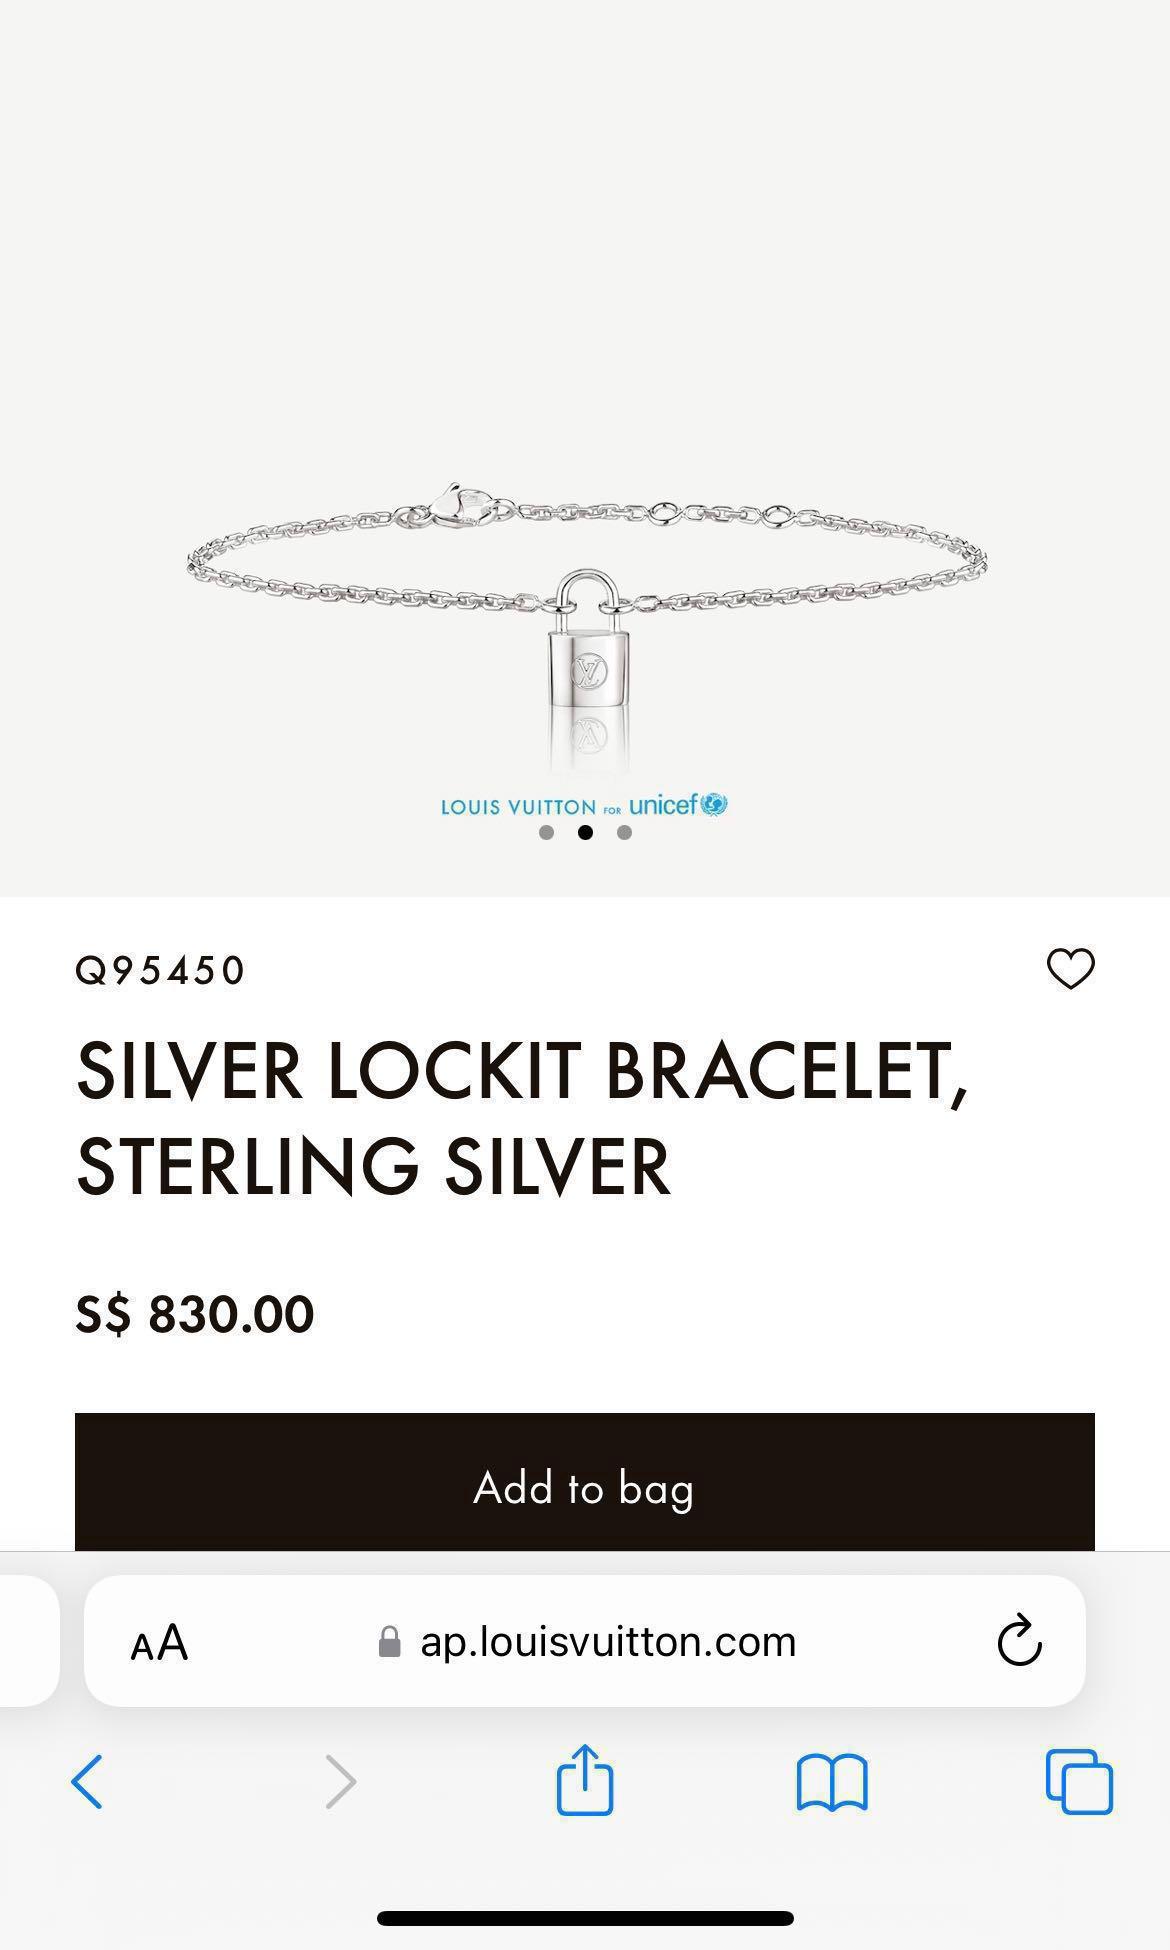 Louis Vuitton Silver lockit bracelet, sterling silver (Q95450)